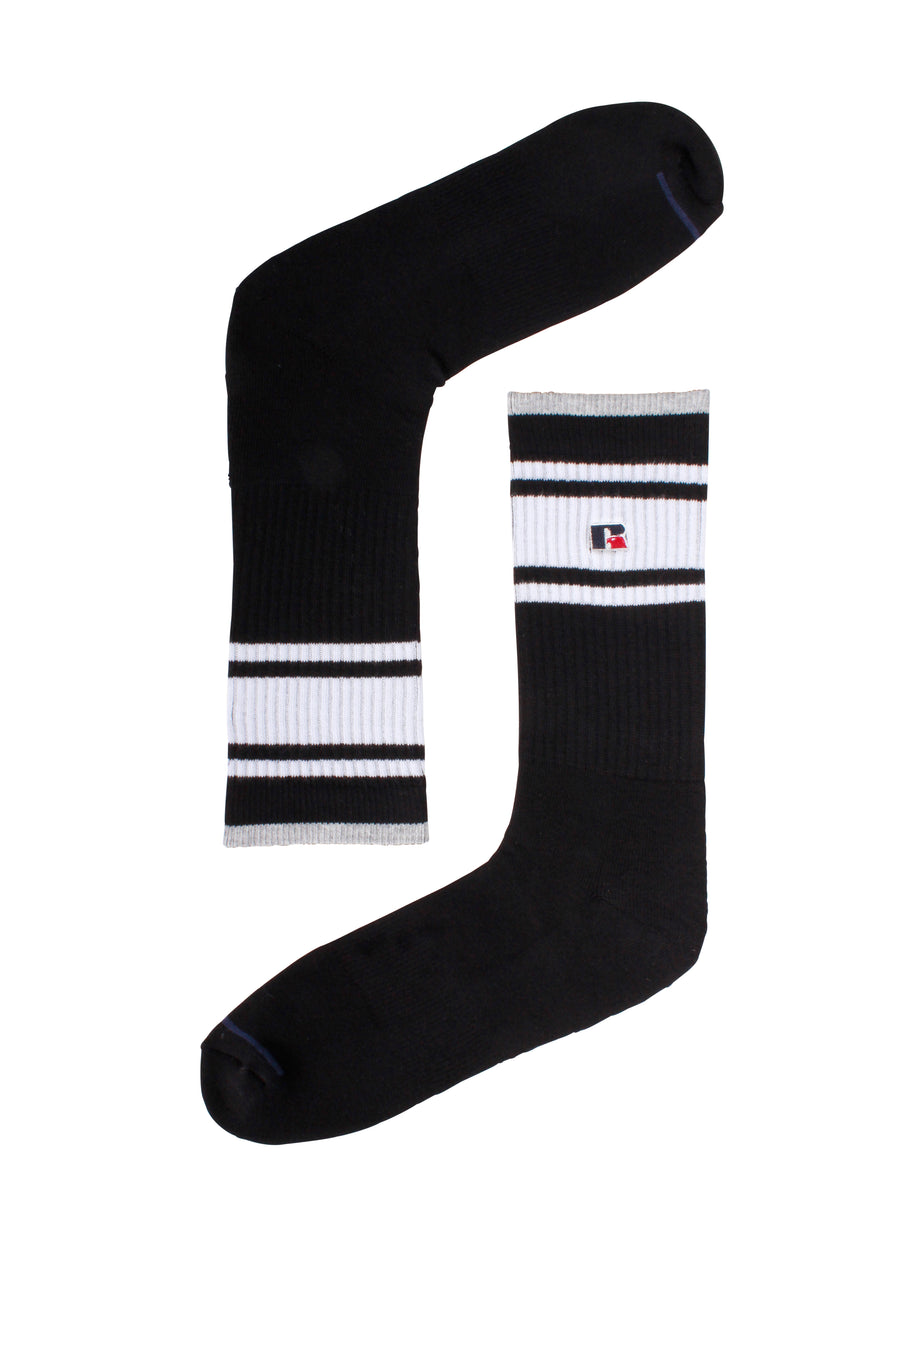 Essential Atlanta Fash Single Socks -Black/White